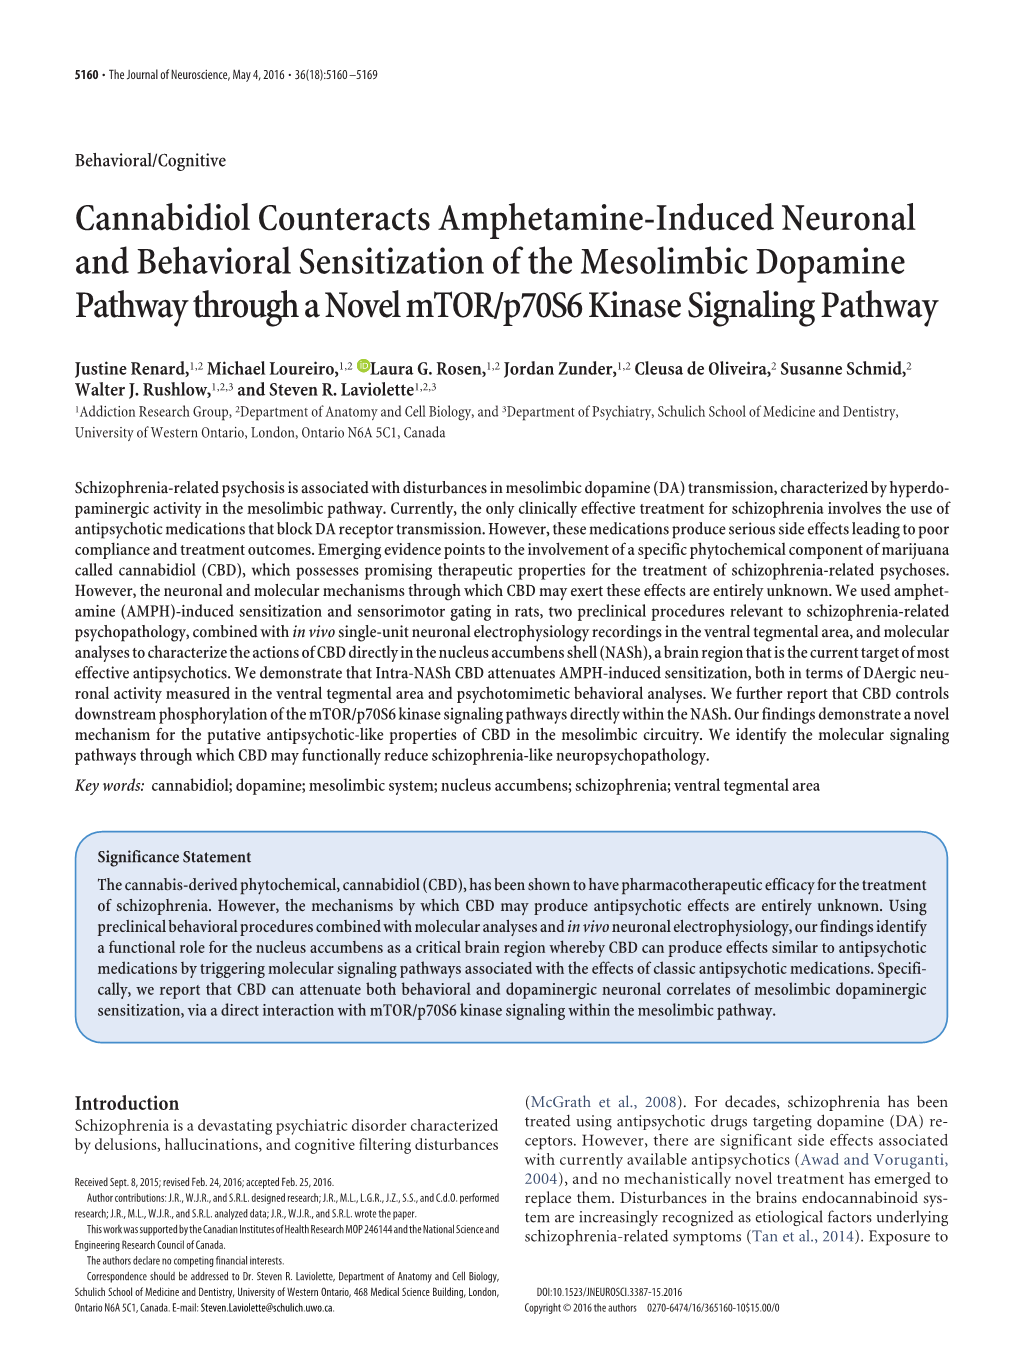 Cannabidiol Counteracts Amphetamine-Induced Neuronal